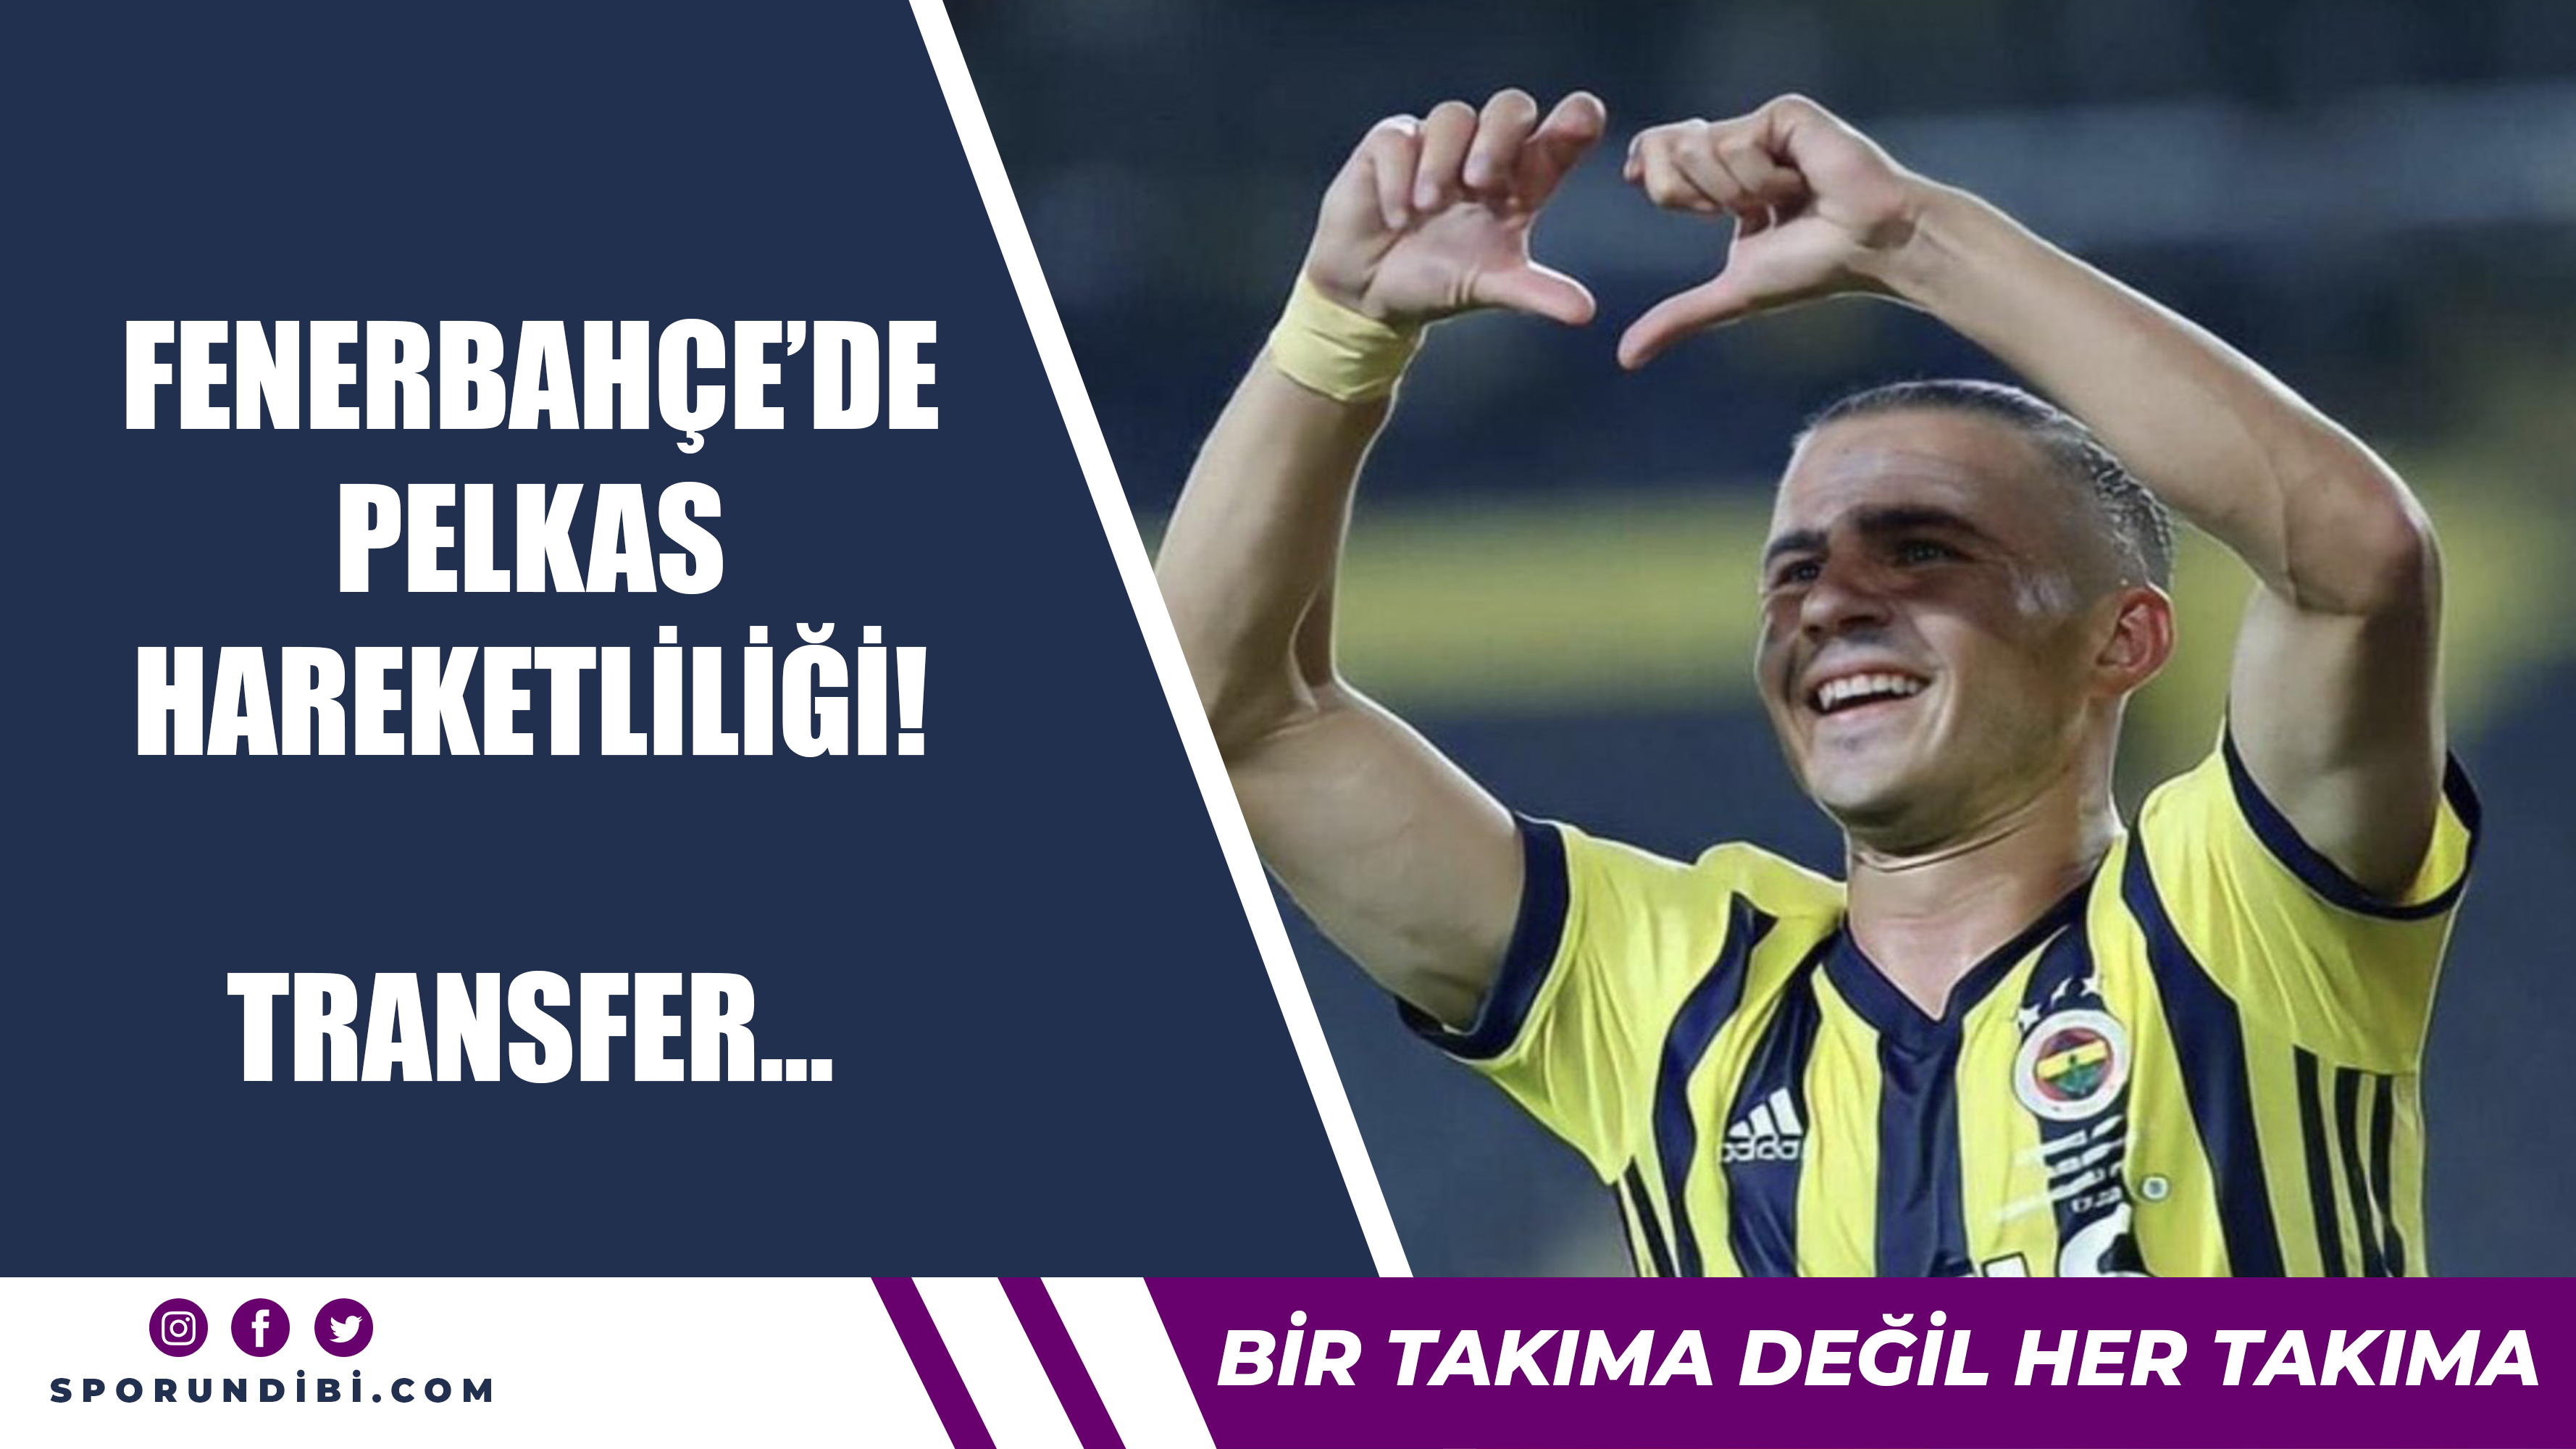 Fenerbahçe'de Pelkas hareketliliği! Transfer...